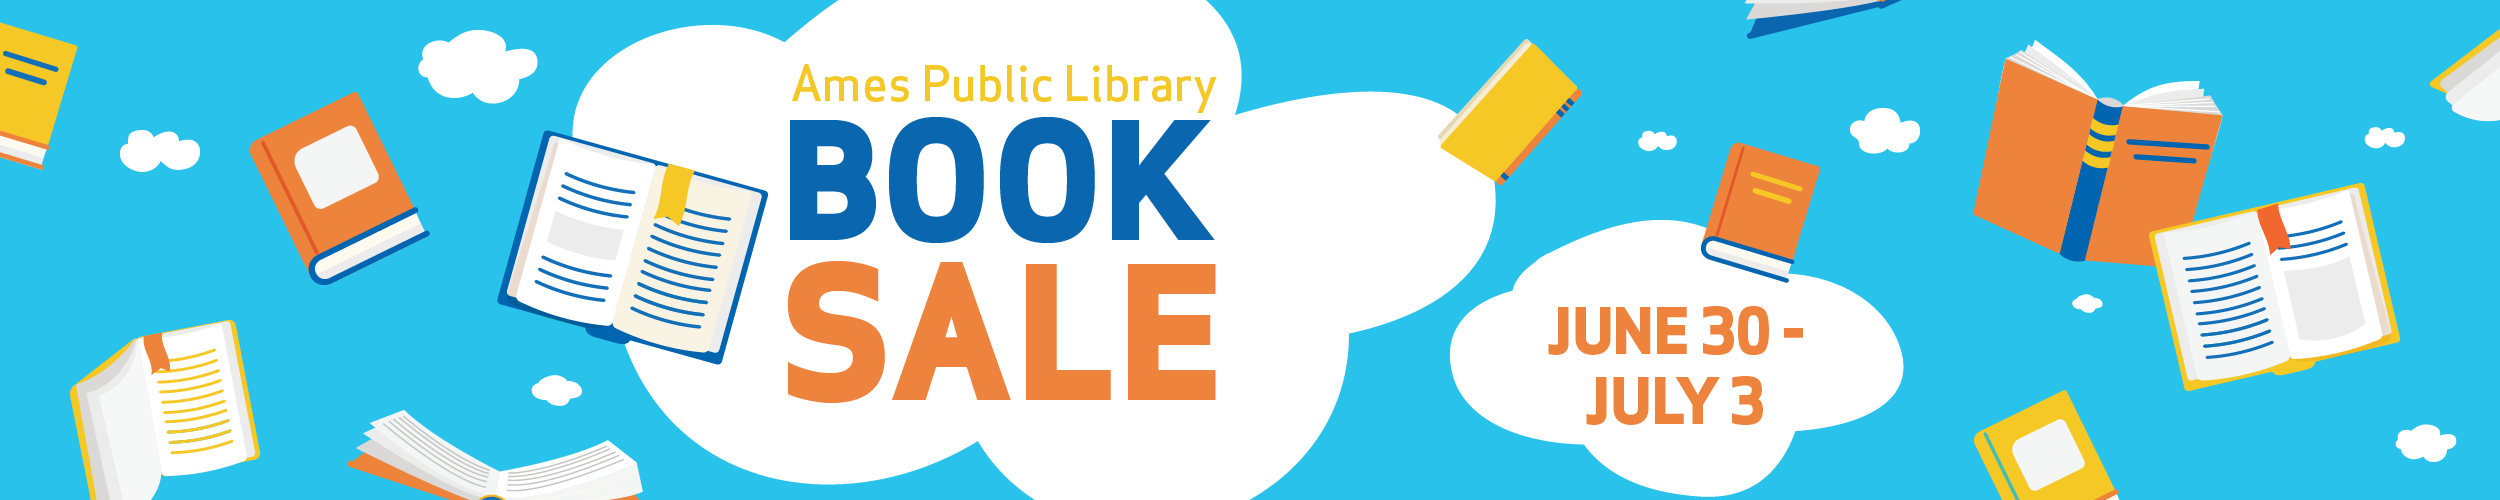 Ames Public Library Book Sale: June 30 - July 3